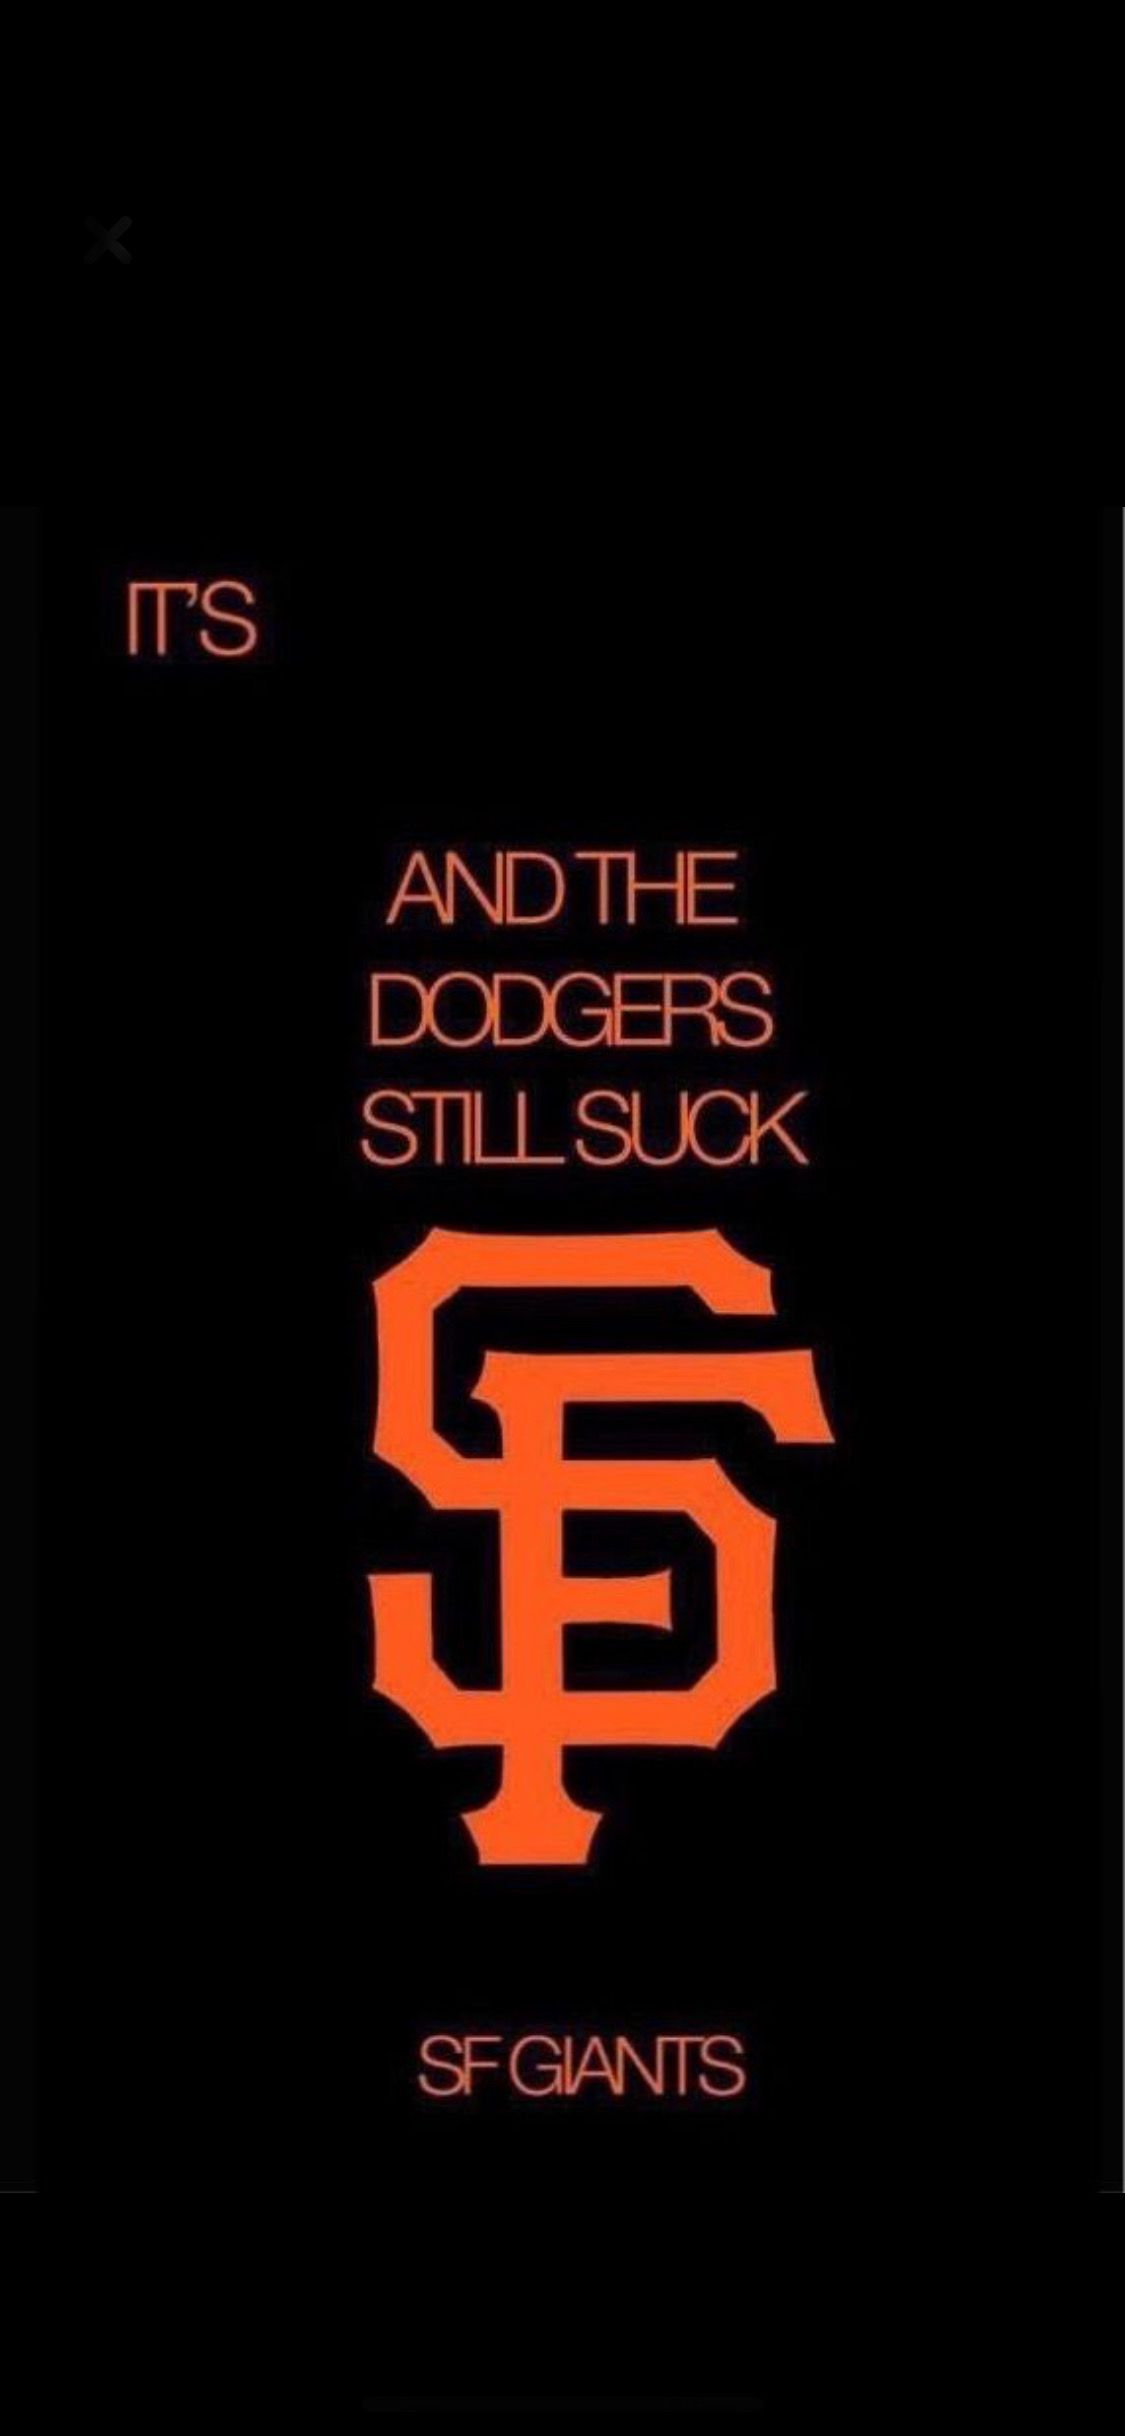 SF Giants iPhone X Lock screen wallpaper! #giantsbaseballlove #suckitdodgers. Sf giants, San francisco giants baseball, Baseball wallpaper